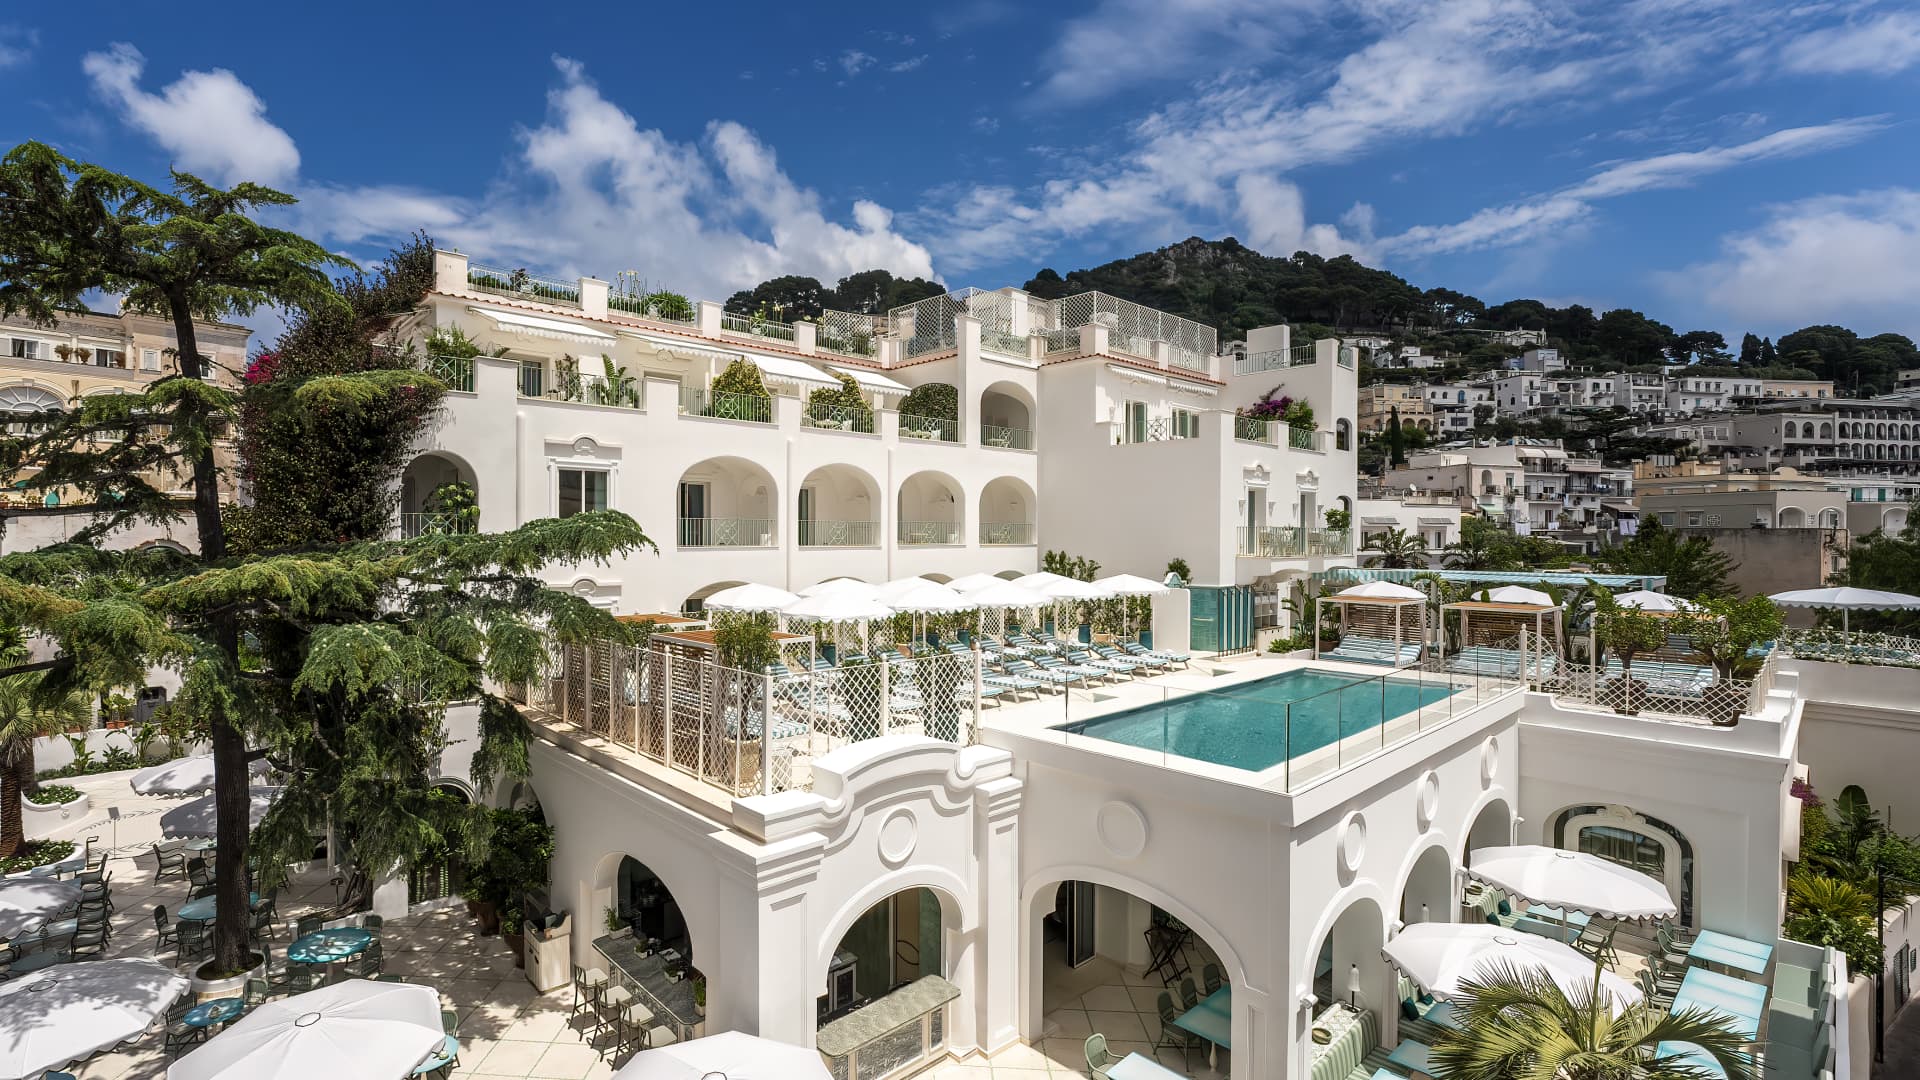 Oetker Collection's Hotel La Palma in Capri, Italy.